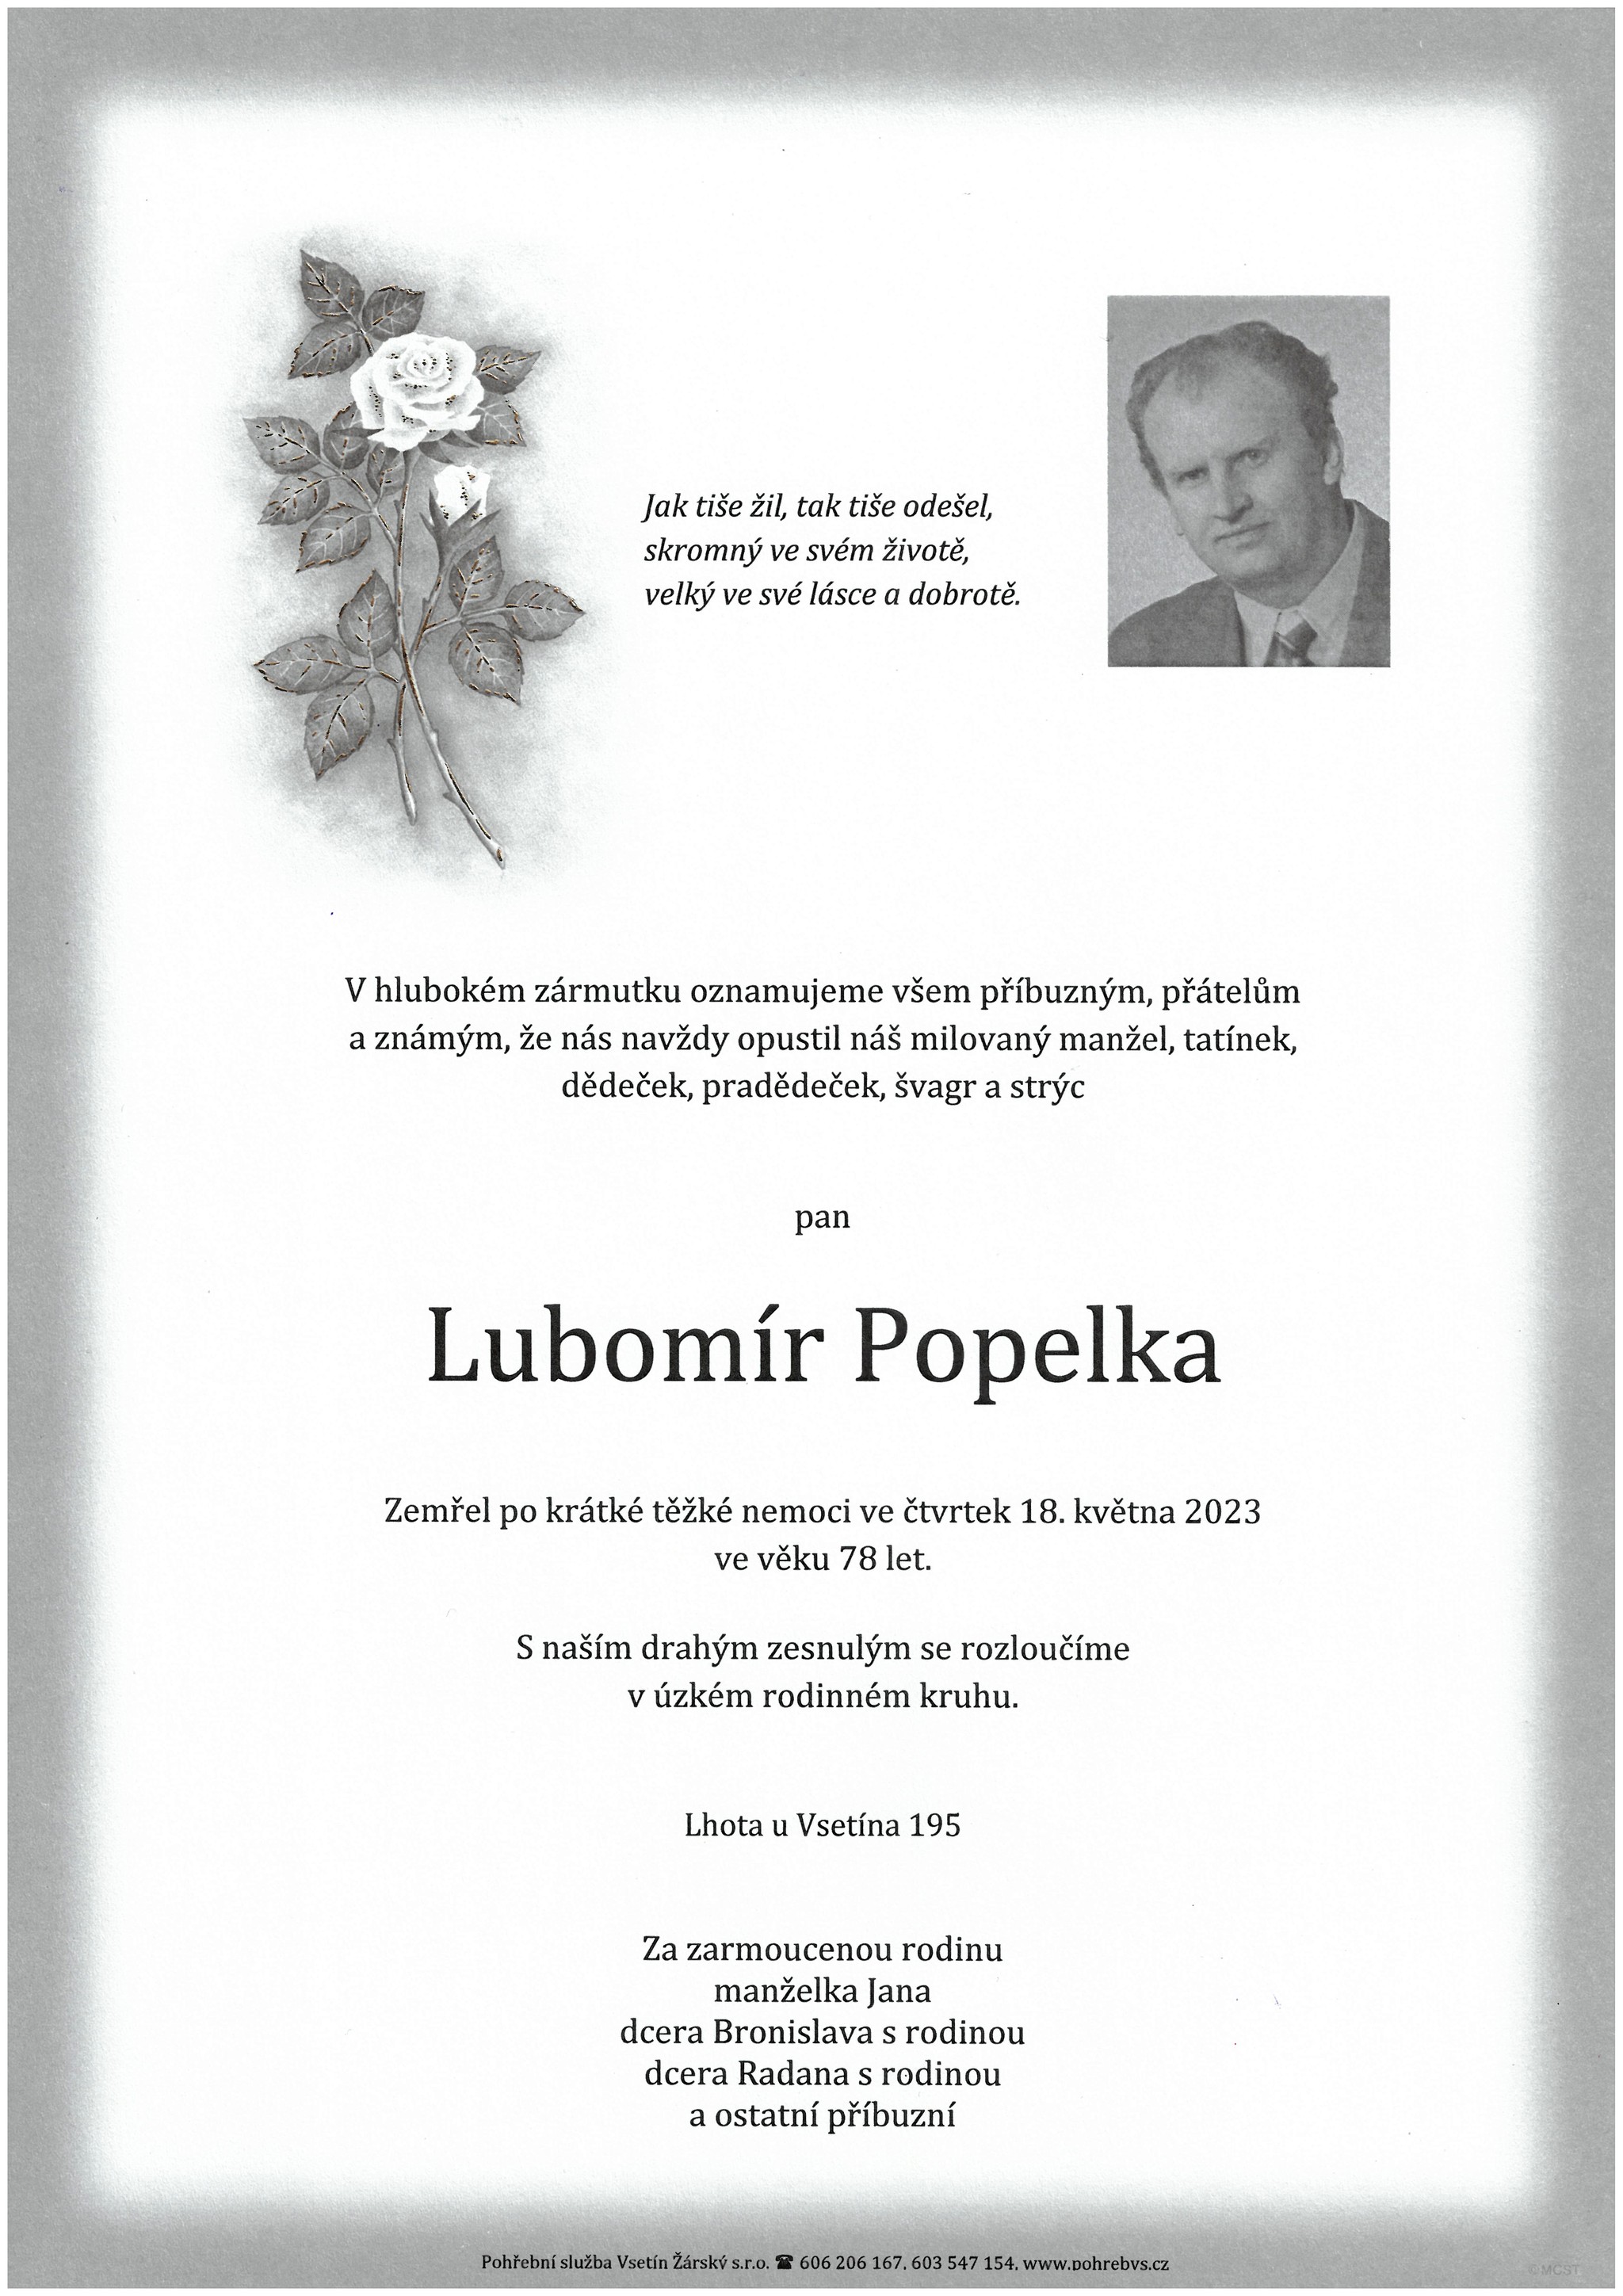 Lubomír Popelka